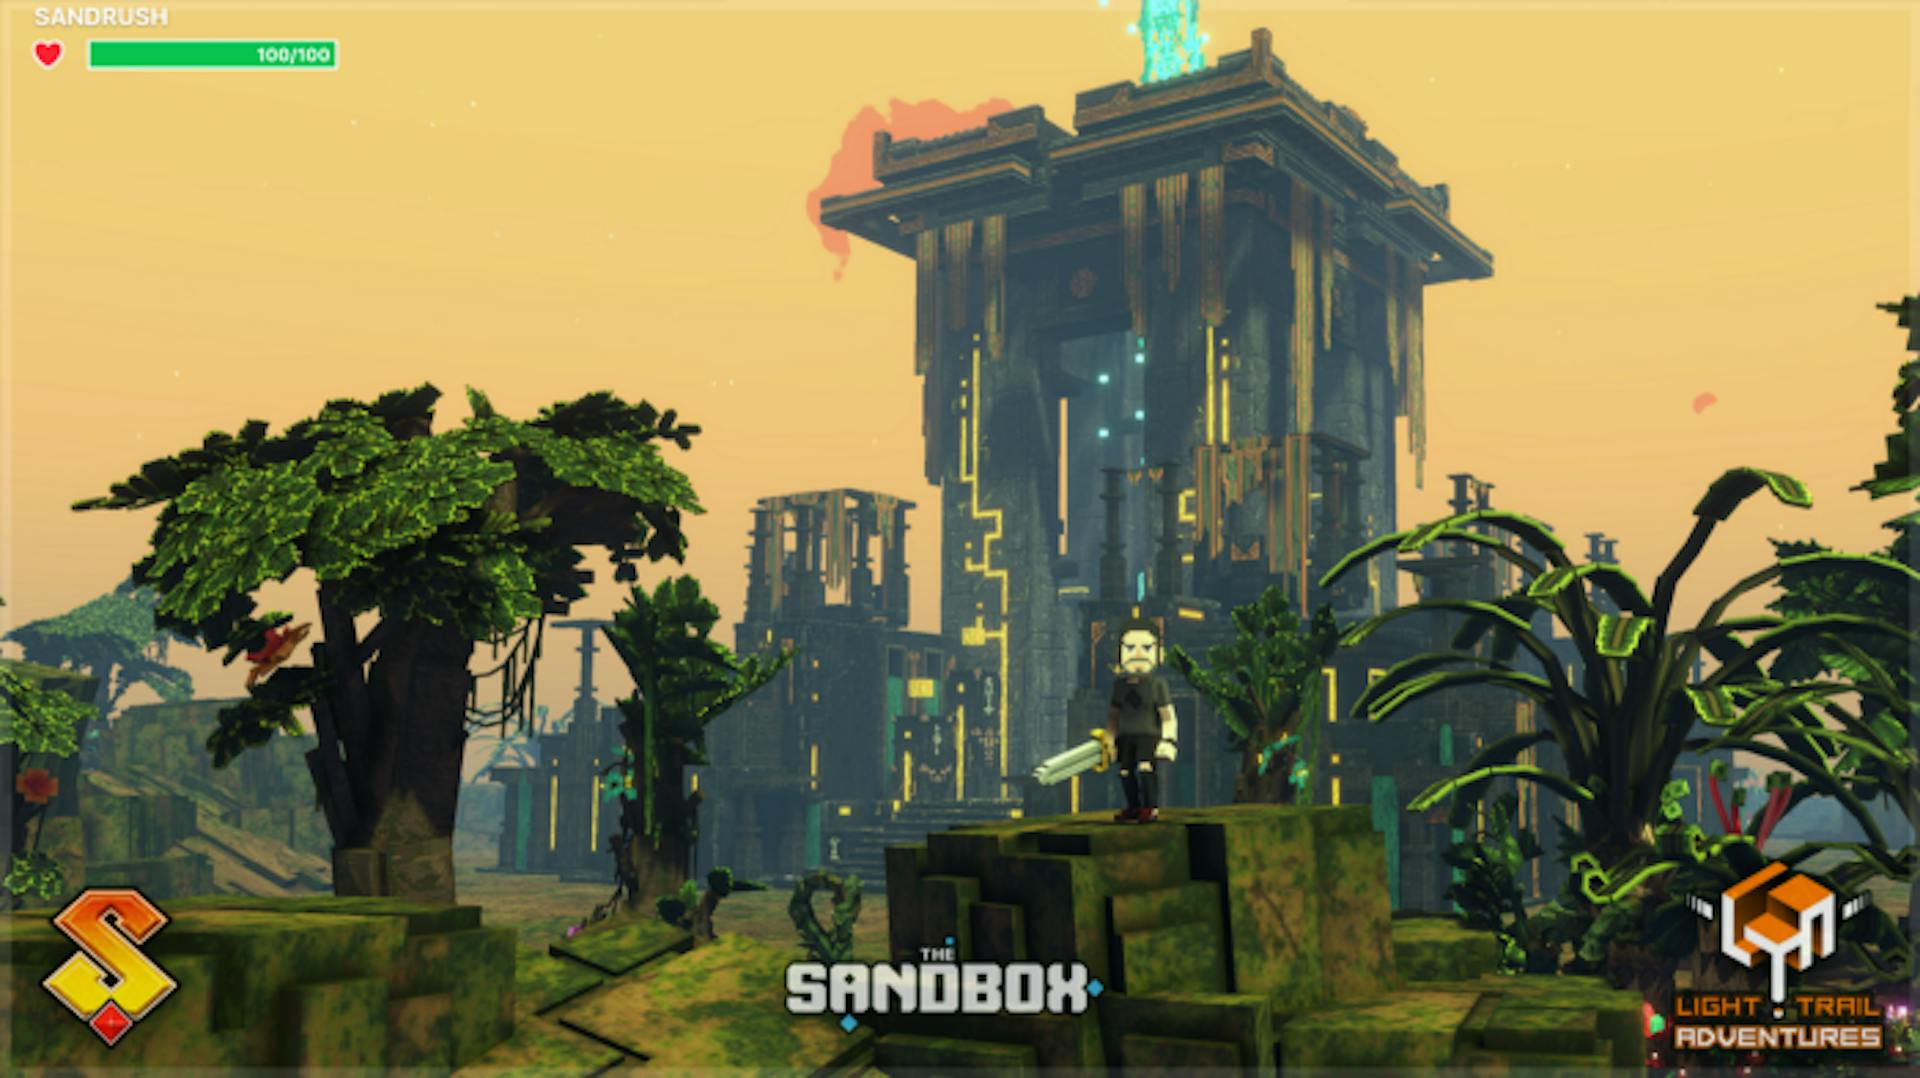 Shrine of Kongz - Source: The Sandbox